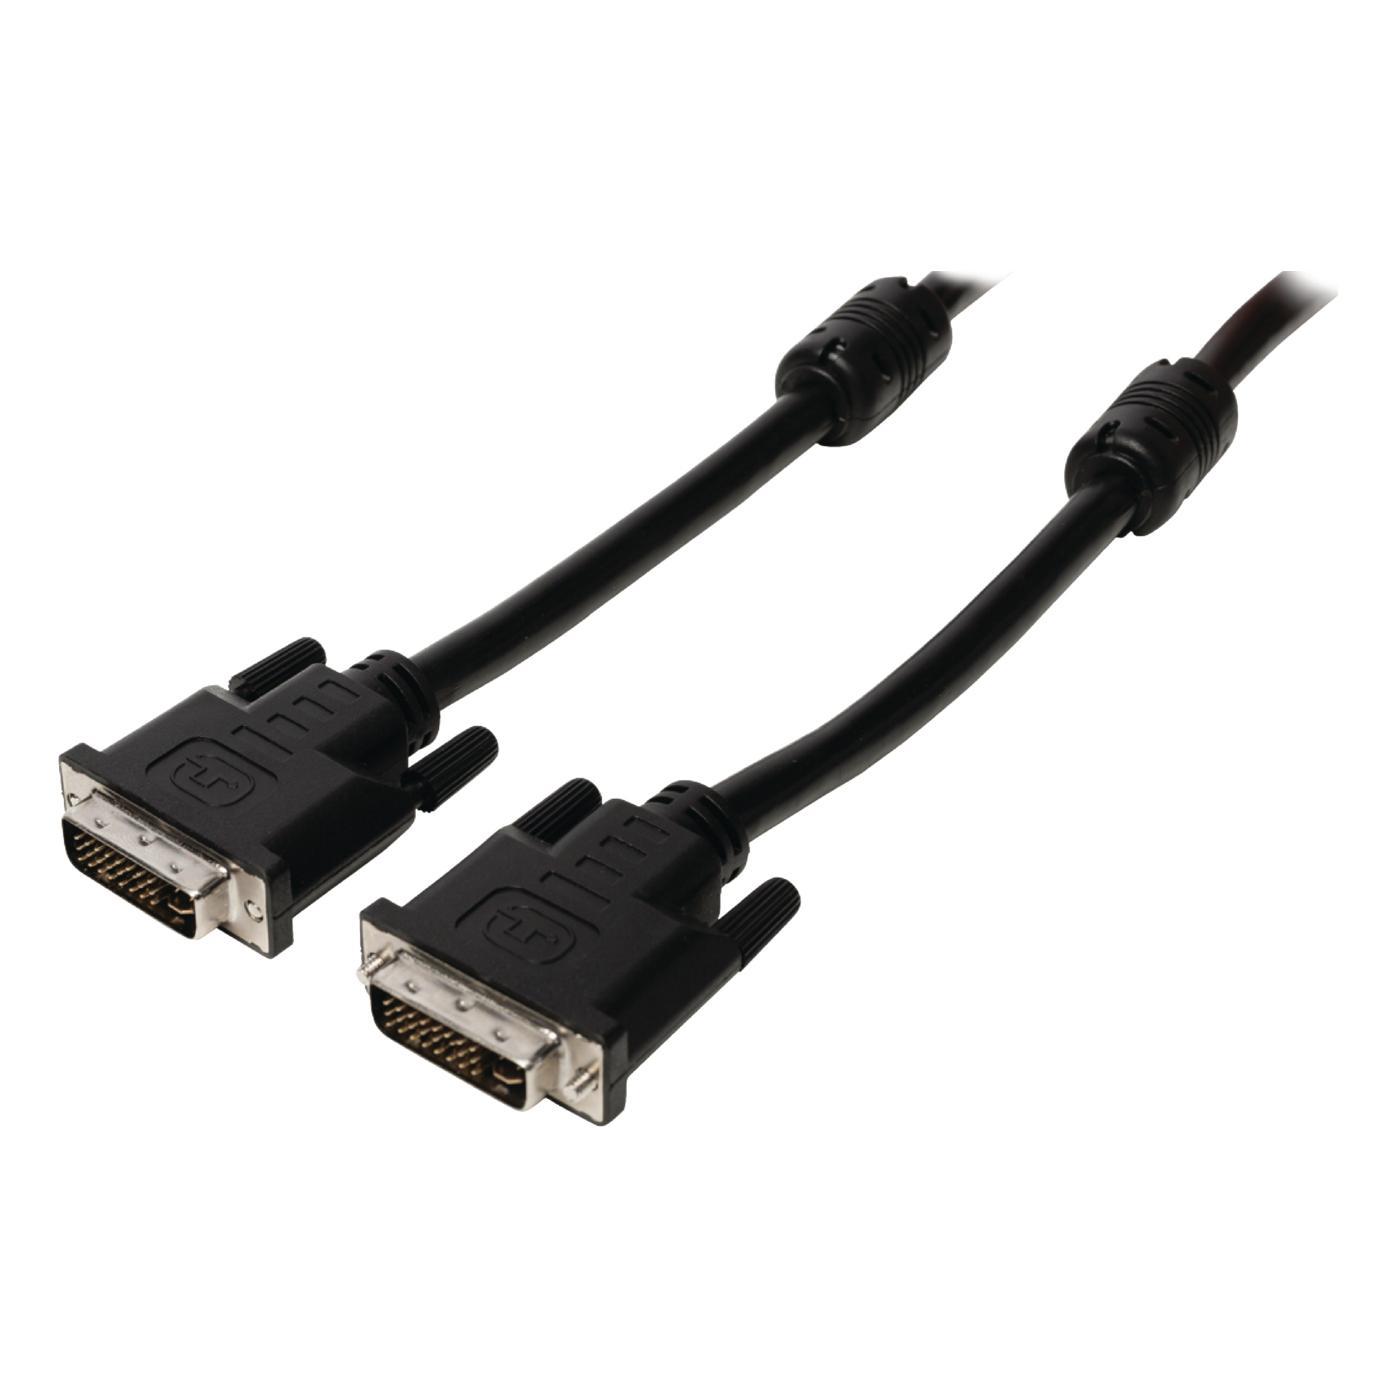 DVI kabel DVI-I 24+5-pin male DVI-I 24+5-pin male 3,00 m zwart